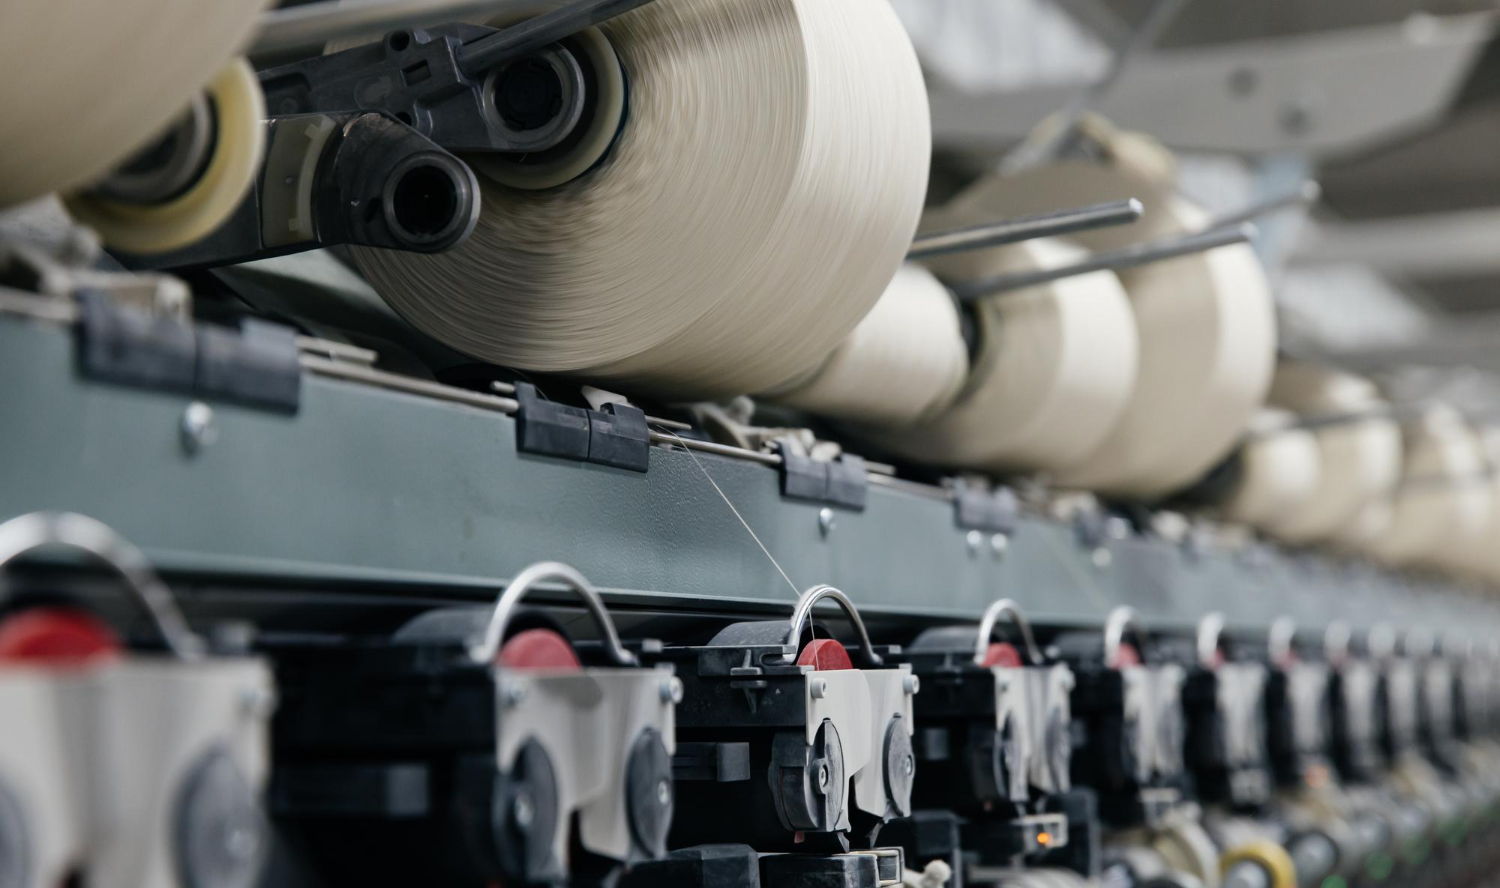 Shiva Woollen & Textile Industries